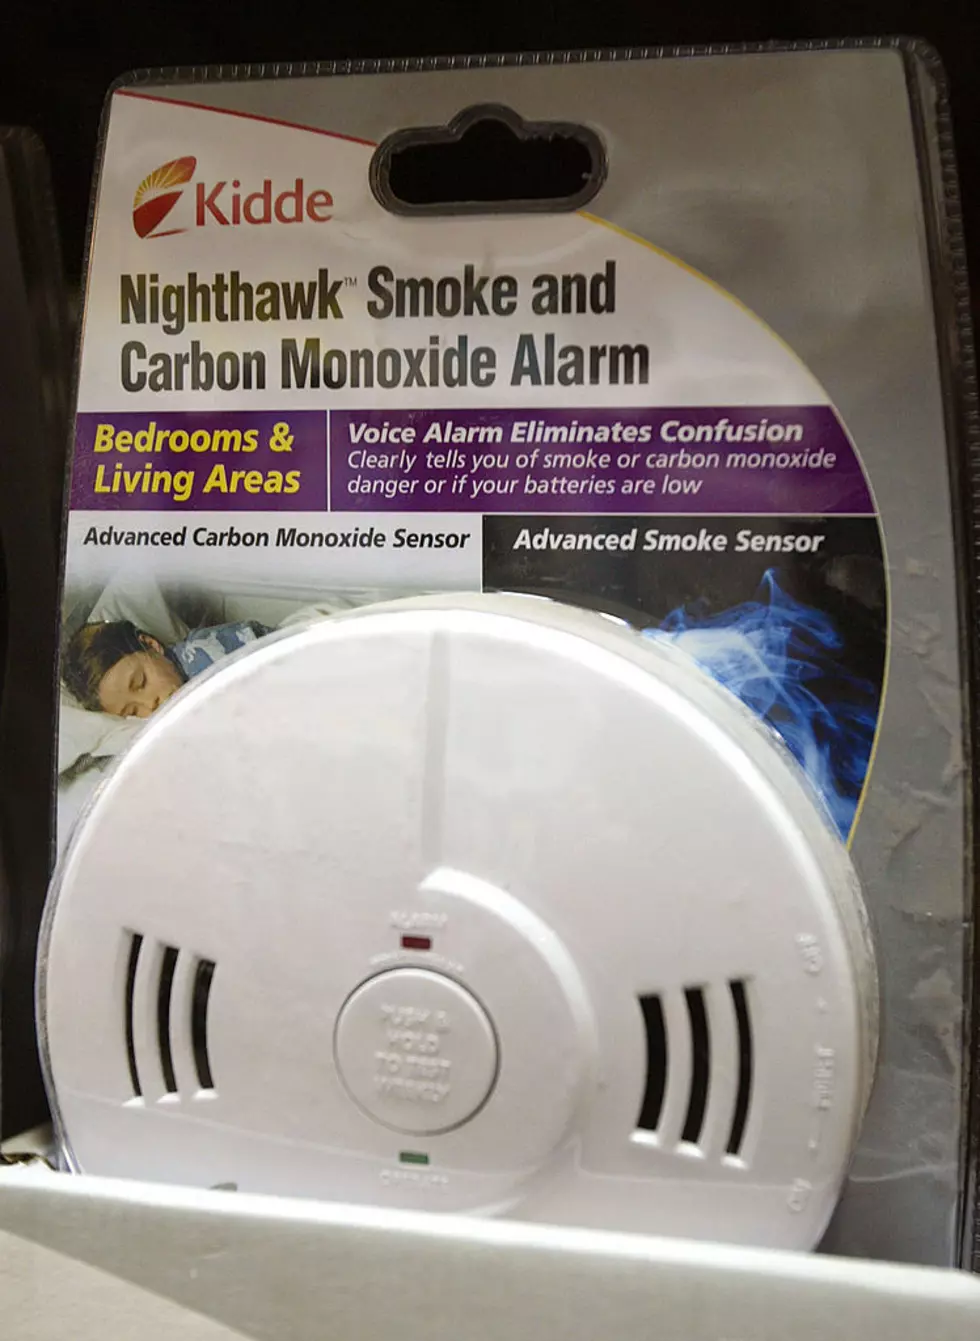 Alarming Recall, Kidde Smoke Detectors May Fail to Signal Fire Alert